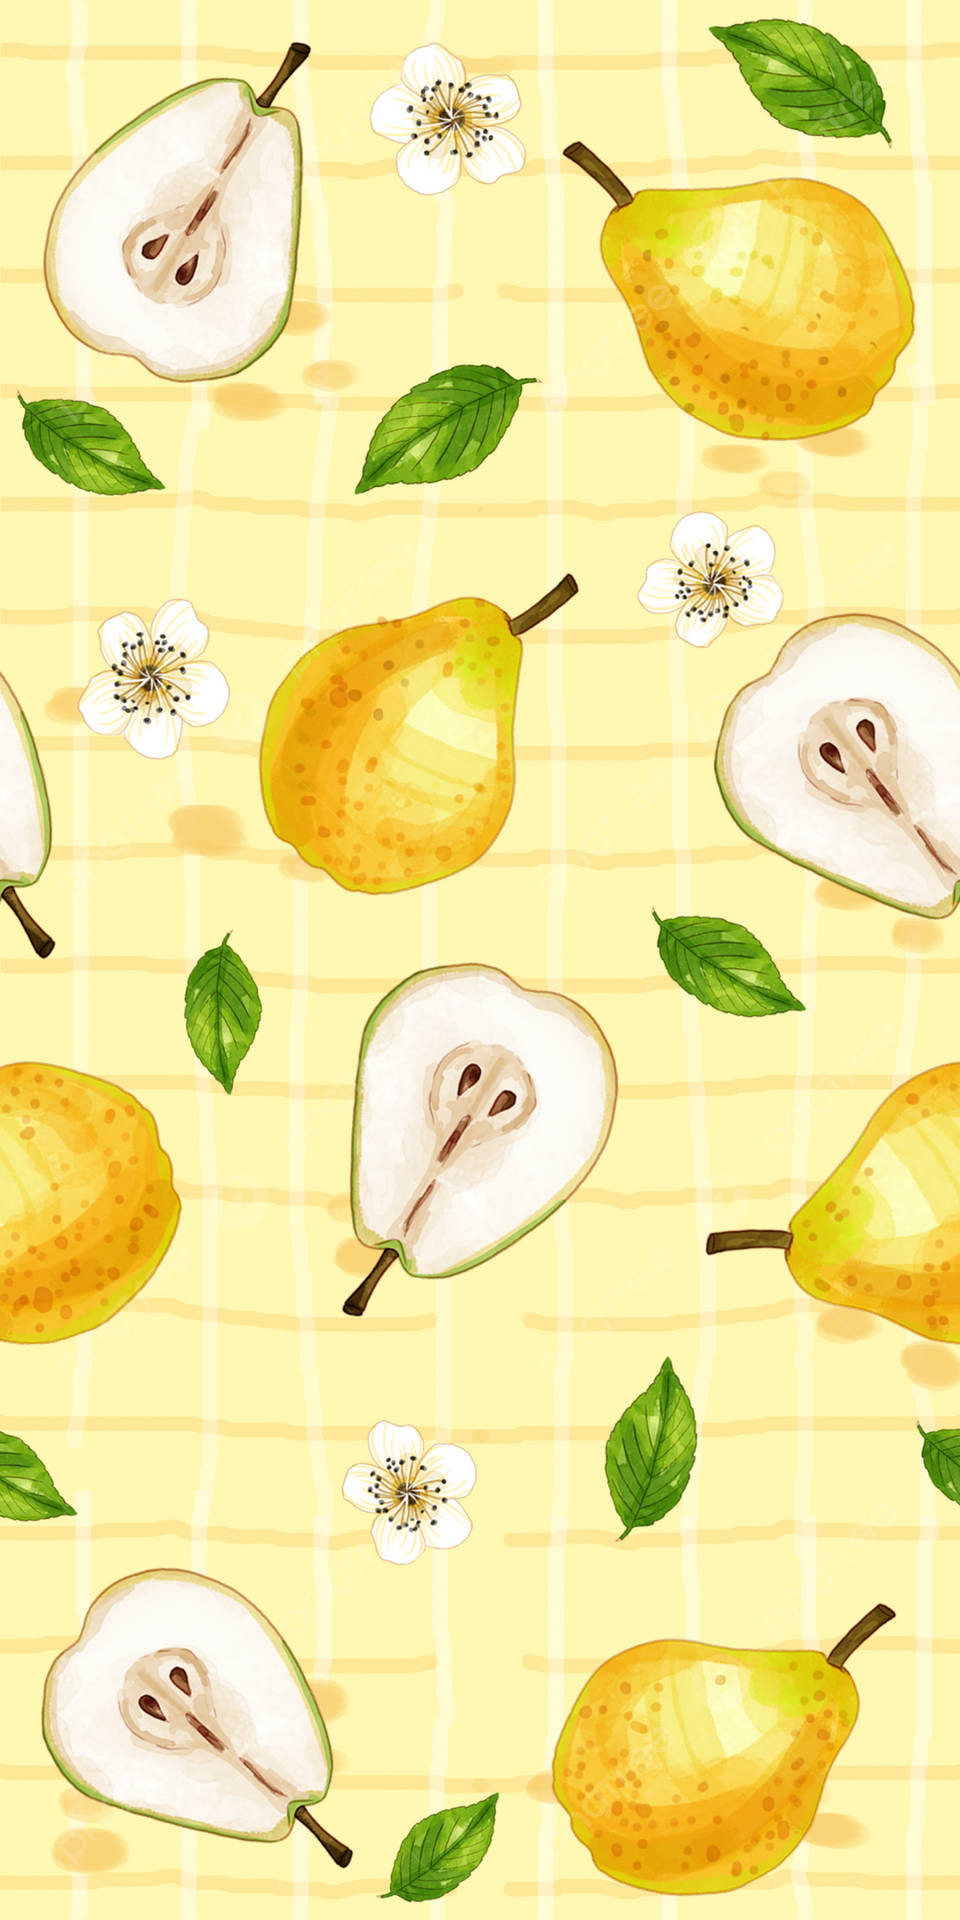 Pear Fruits Grid Poster Wallpaper